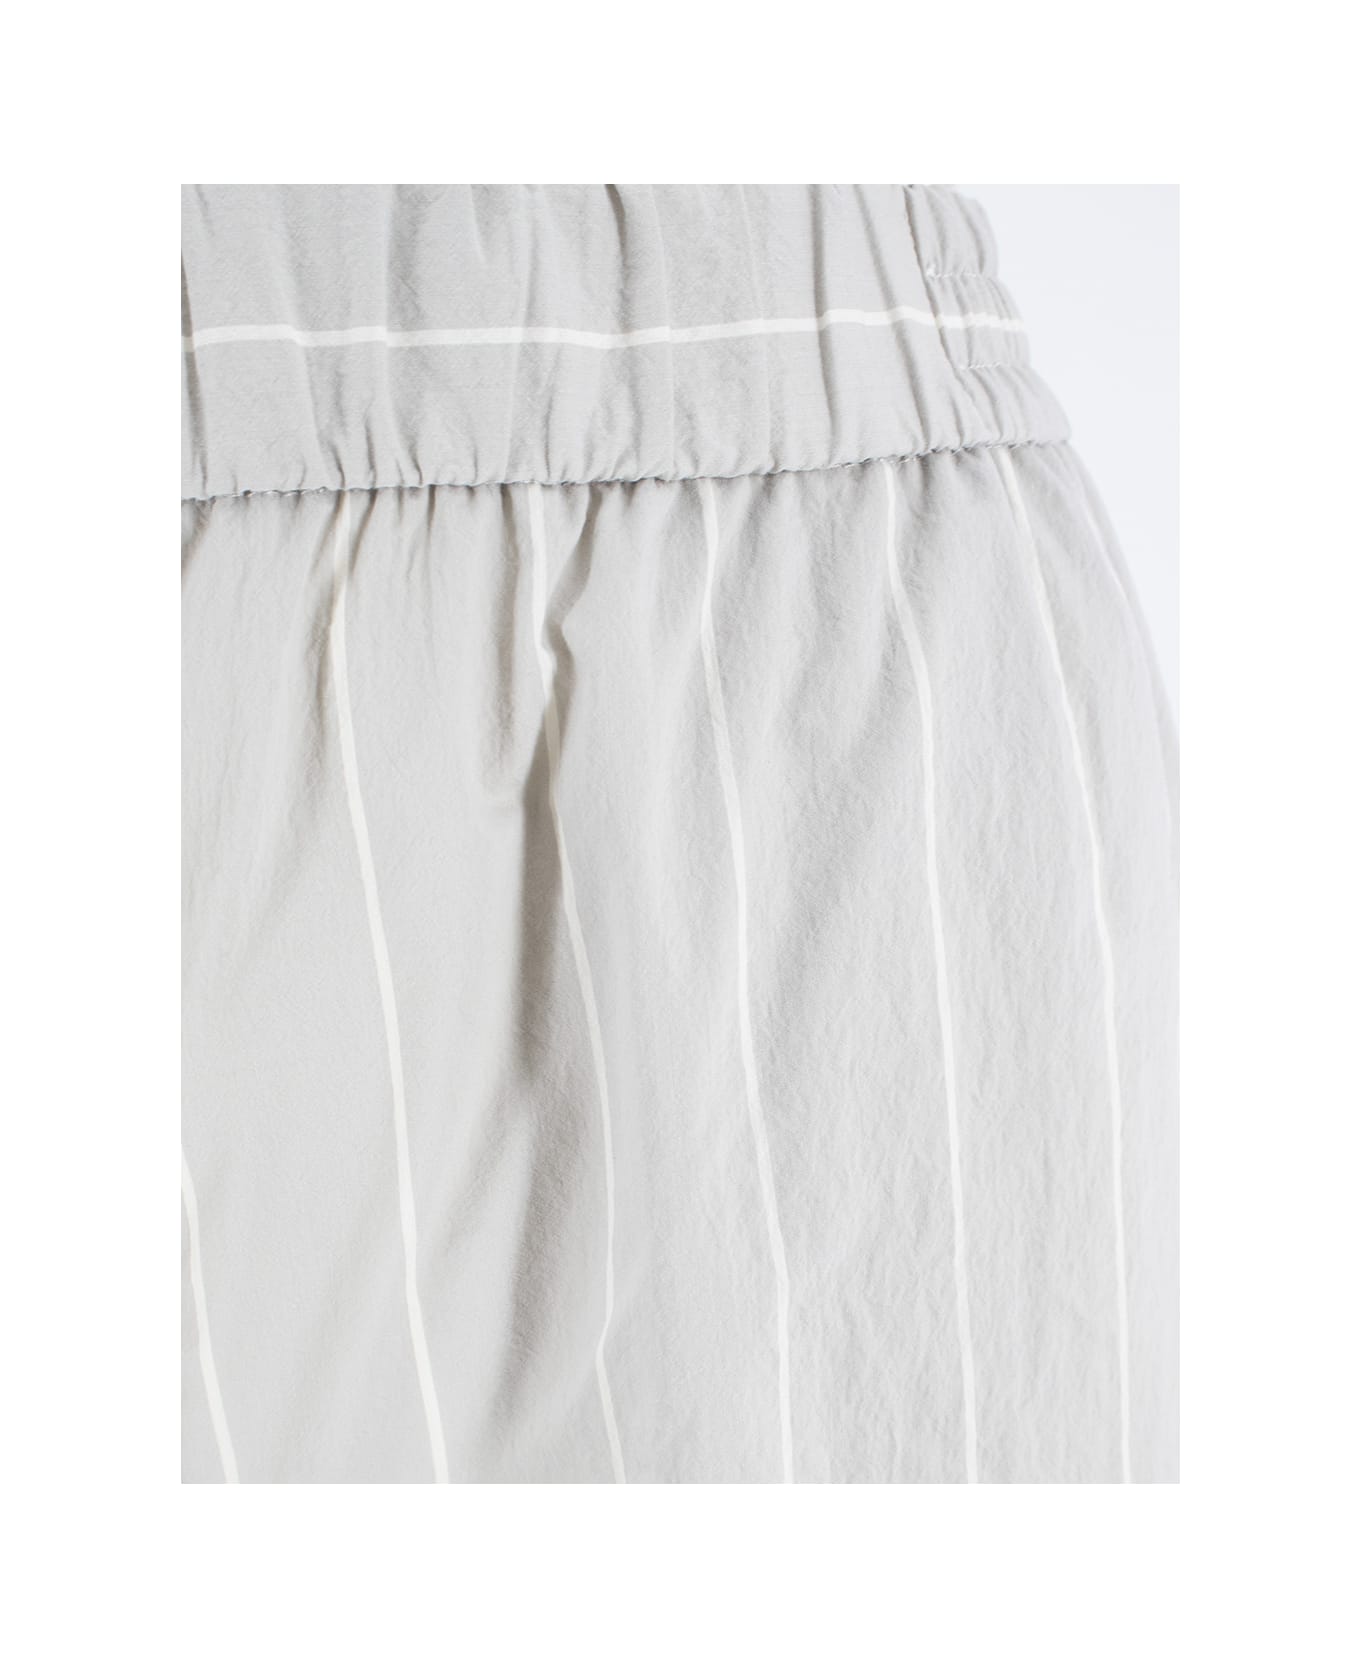 Le Tricot Perugia Trousers - GREY_WHITE